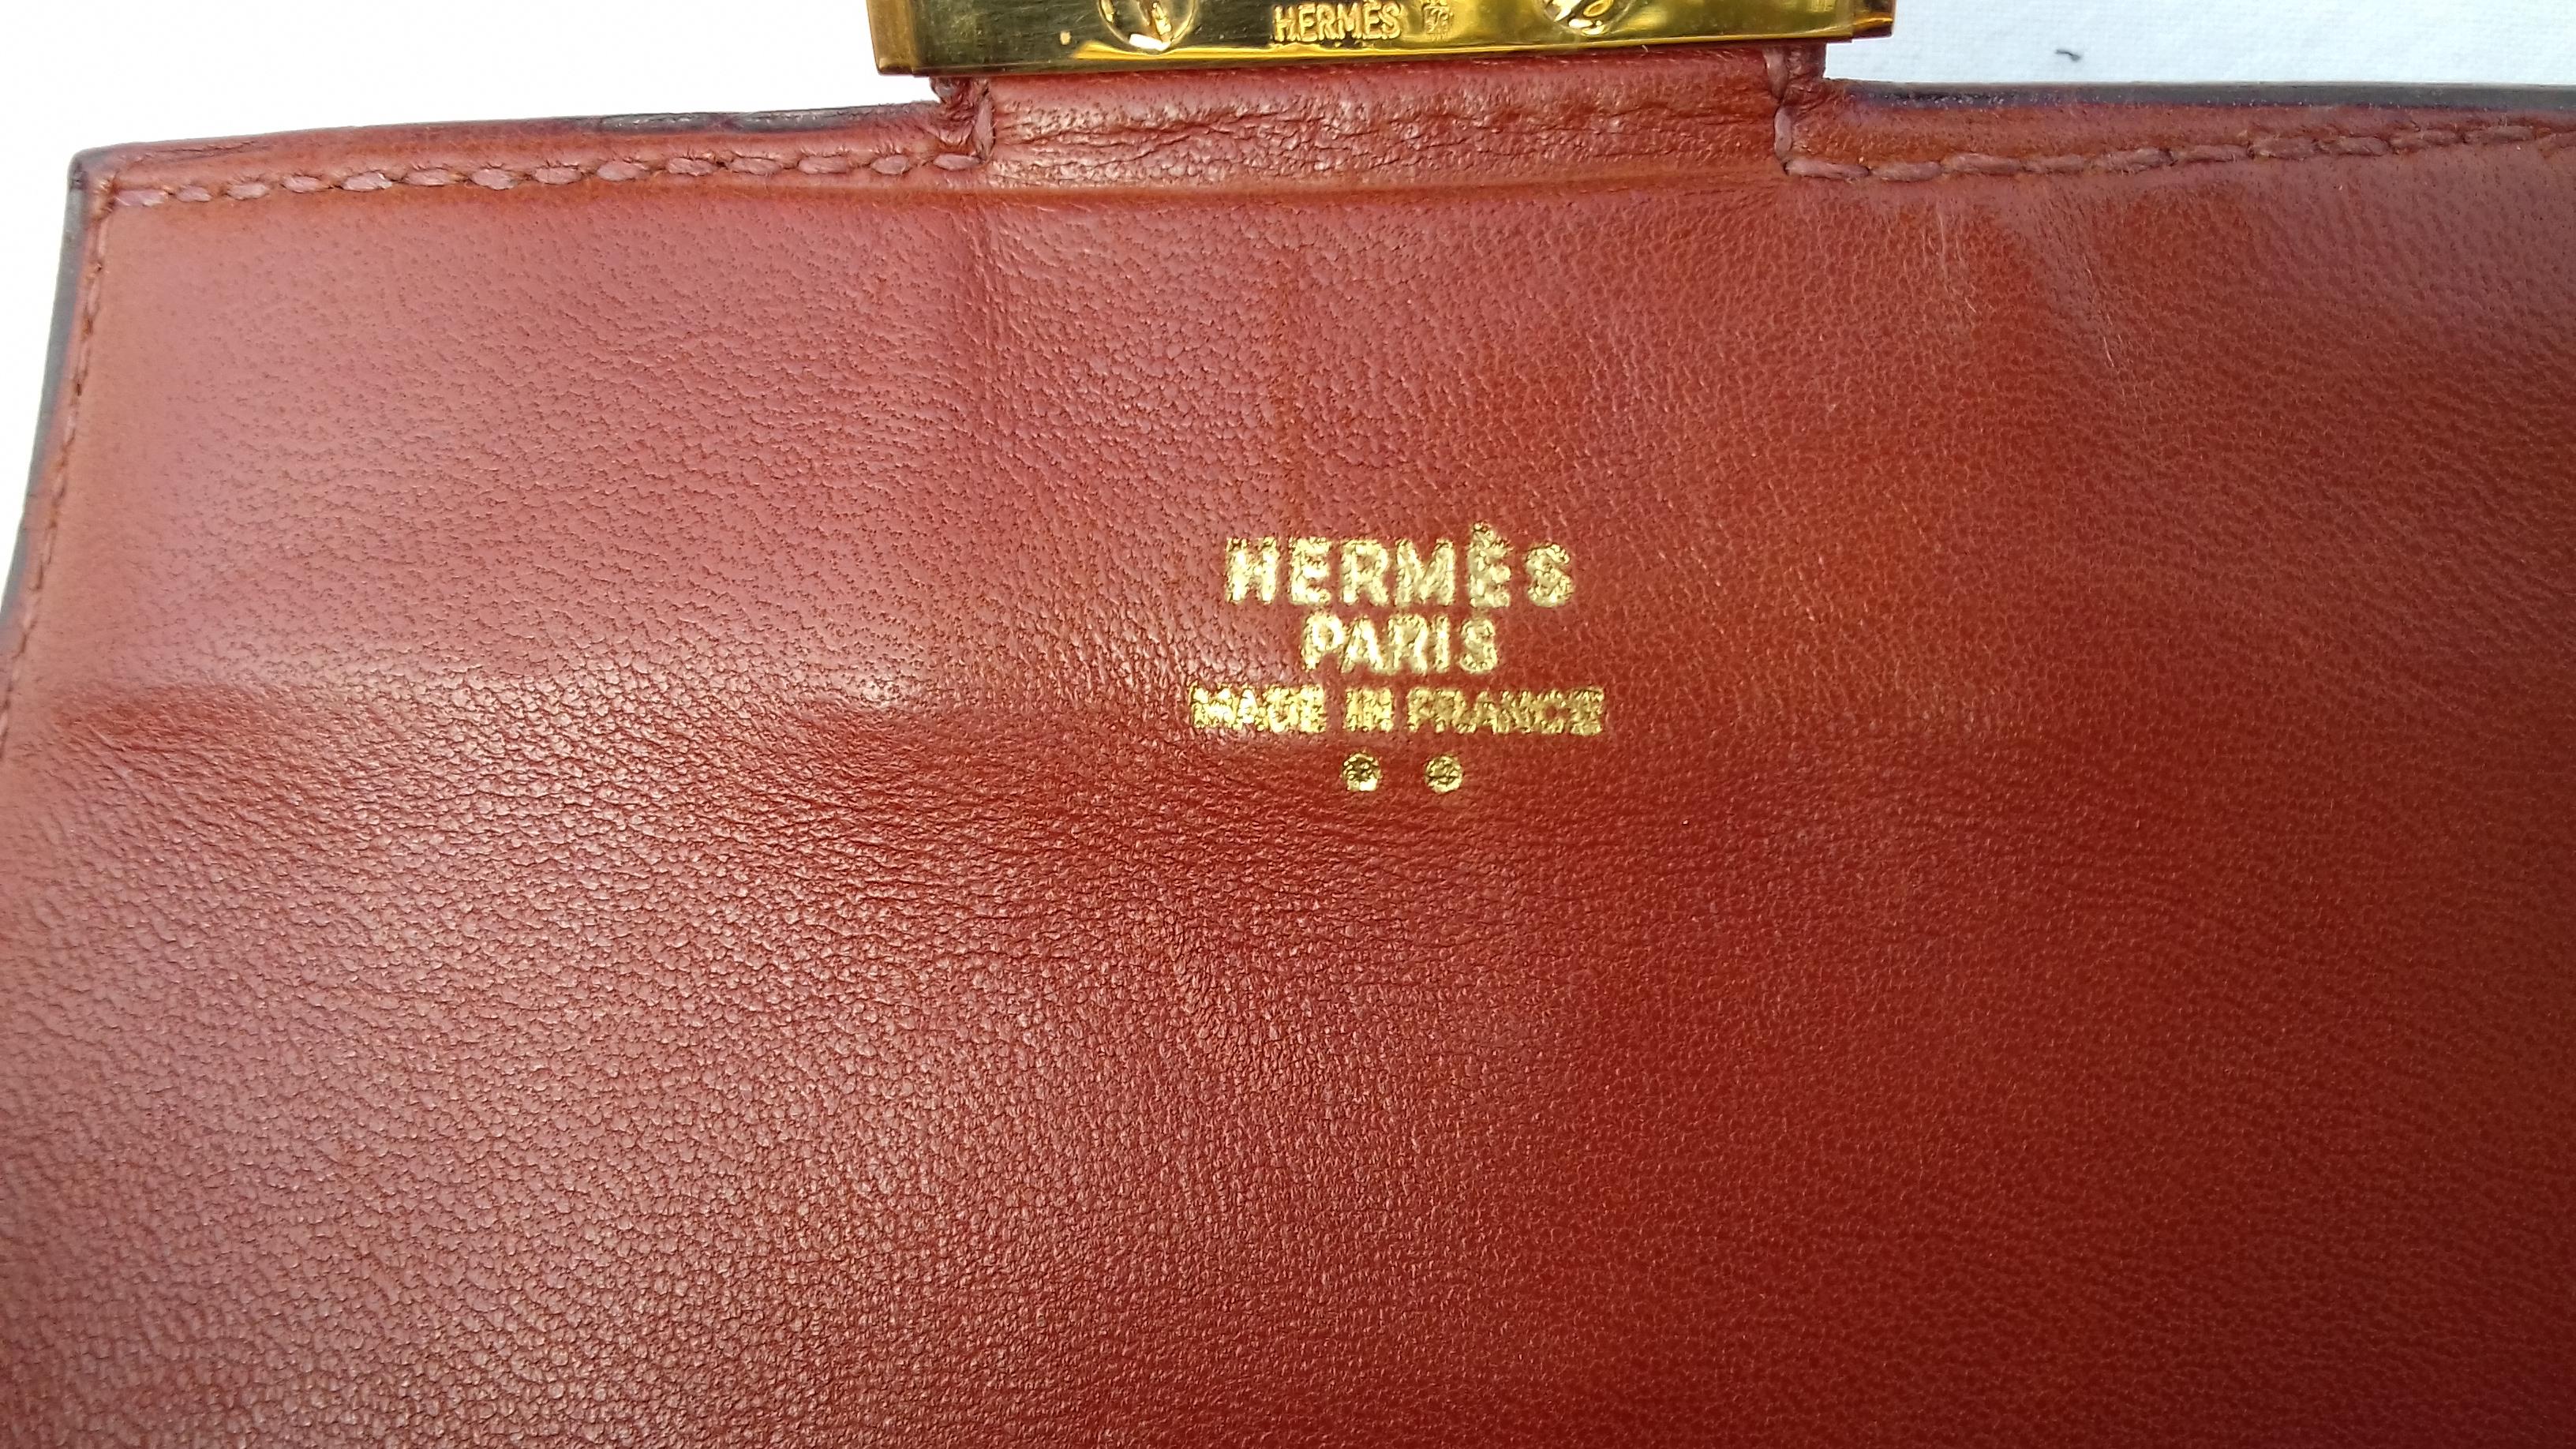 Exceptional Hermès Handbag Purse Clutch in Brown Crocodile Ghw Rare For Sale 3